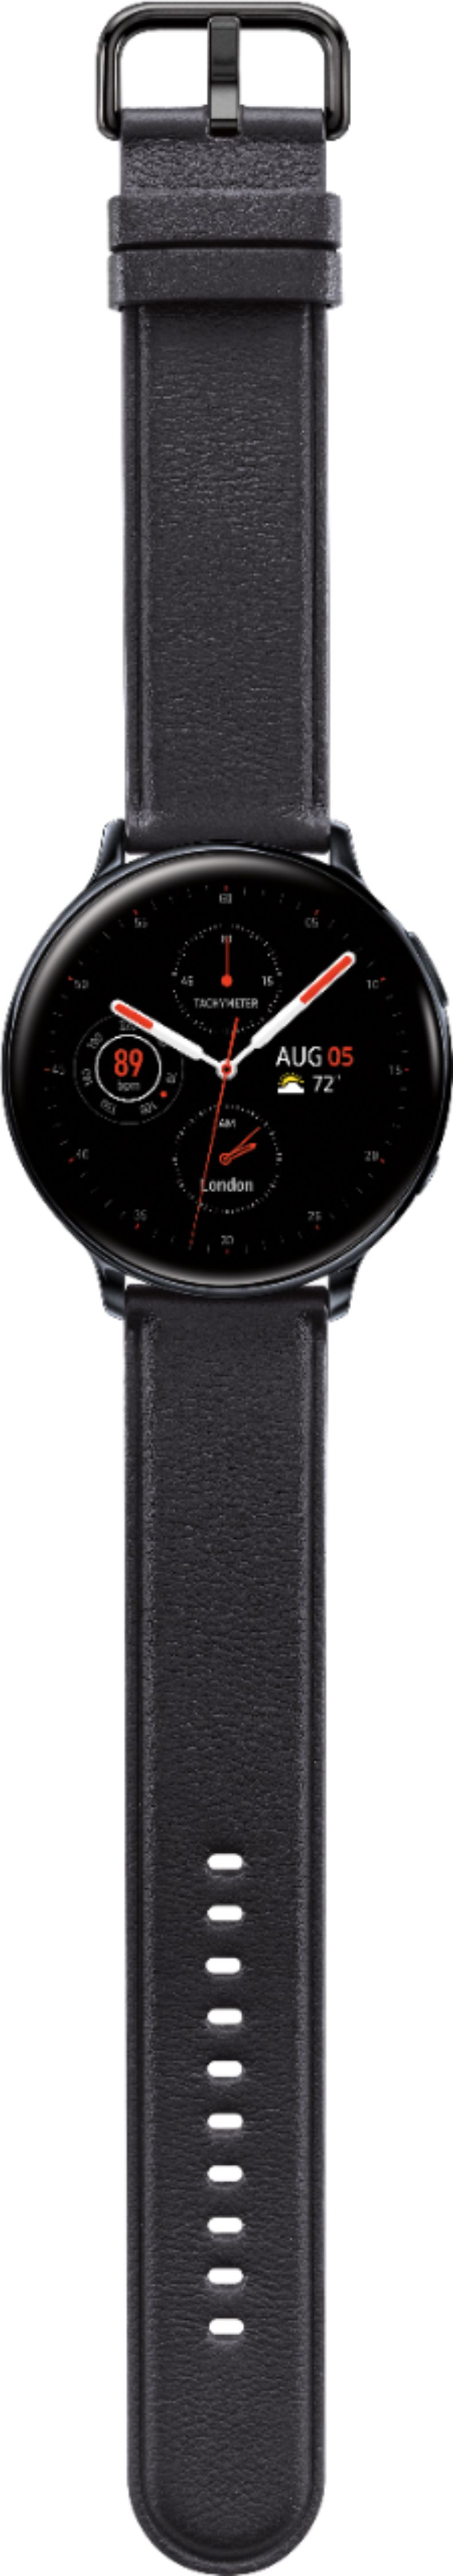 Samsung Galaxy Watch Active 2 (44mm) specs - PhoneArena